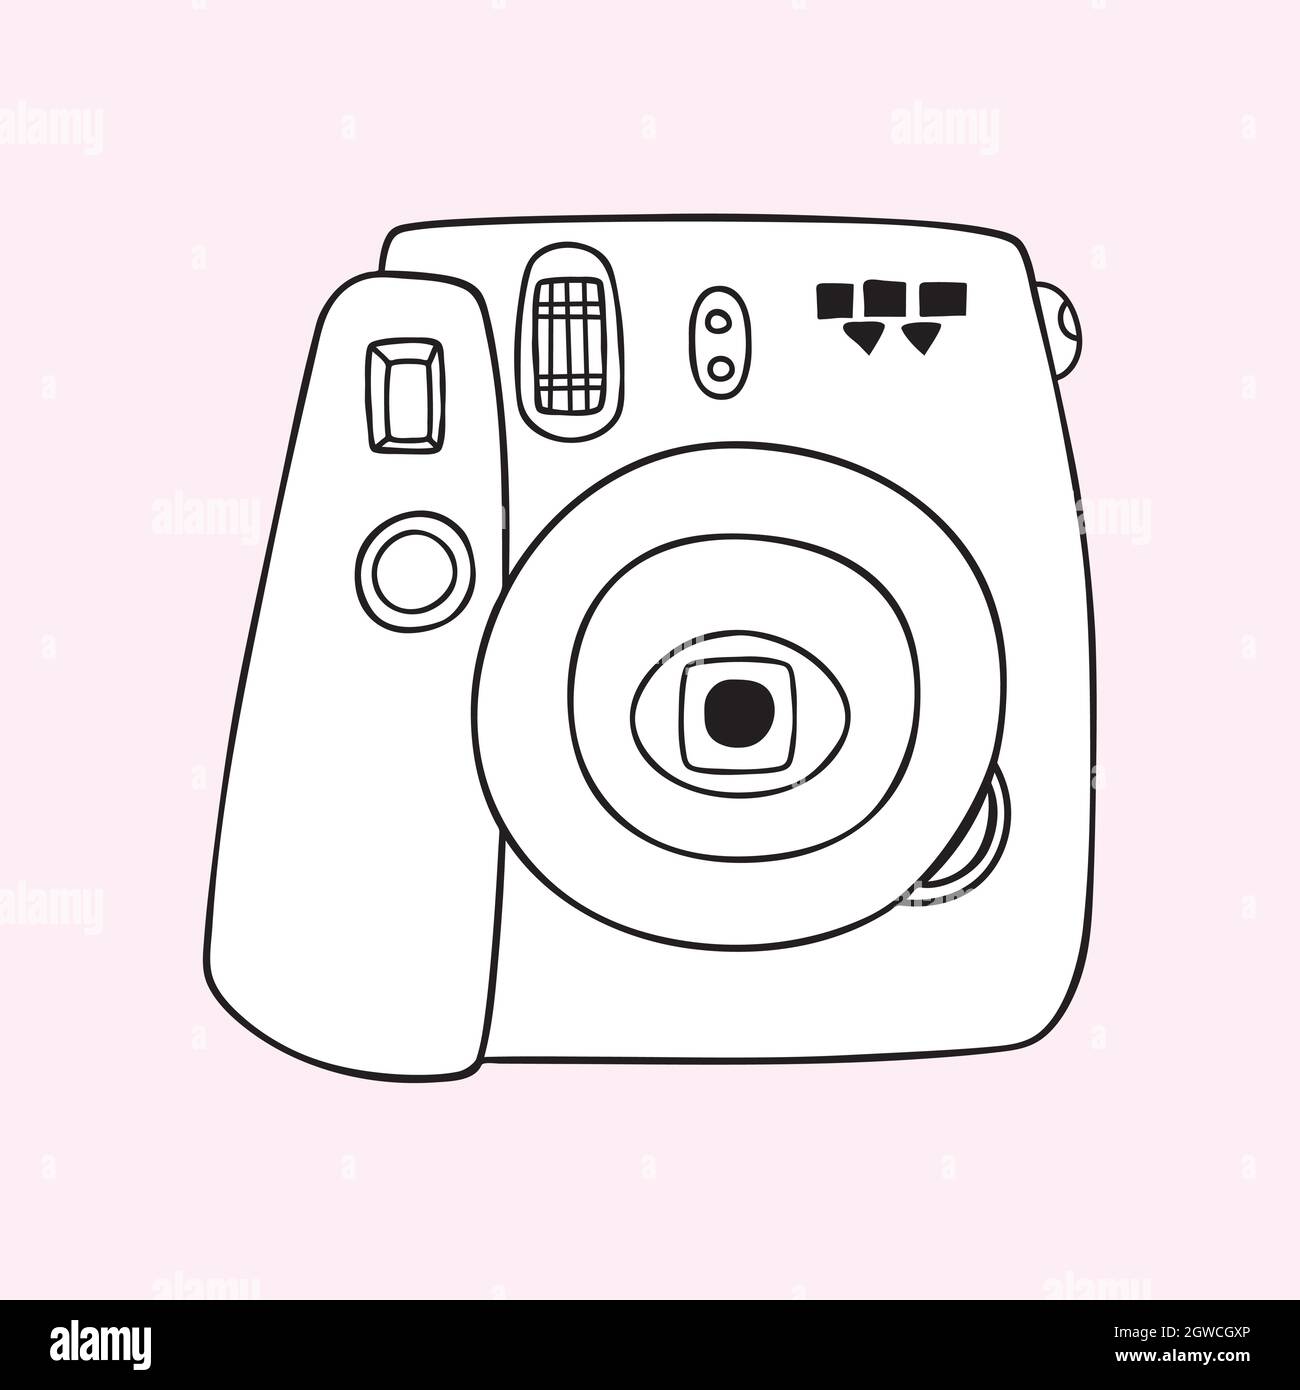 606 Polaroid Camera Images, Stock Photos & Vectors | Shutterstock